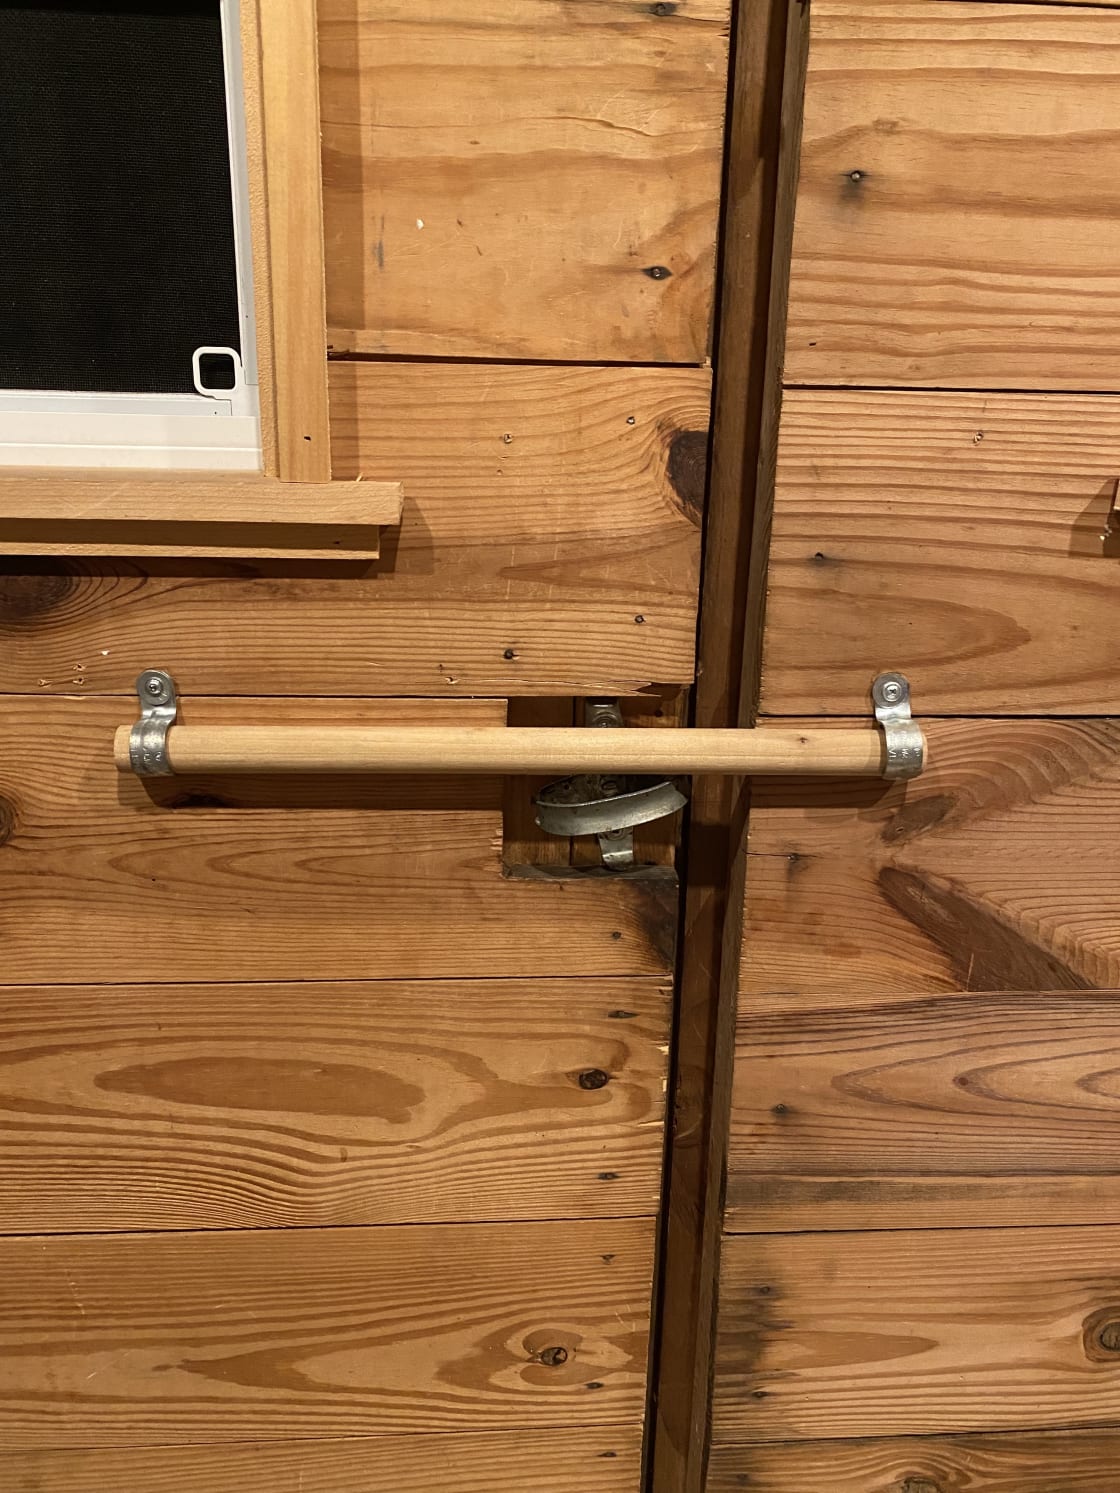 the lock is a piece of wood held by brackets - the door handle itself has no lock